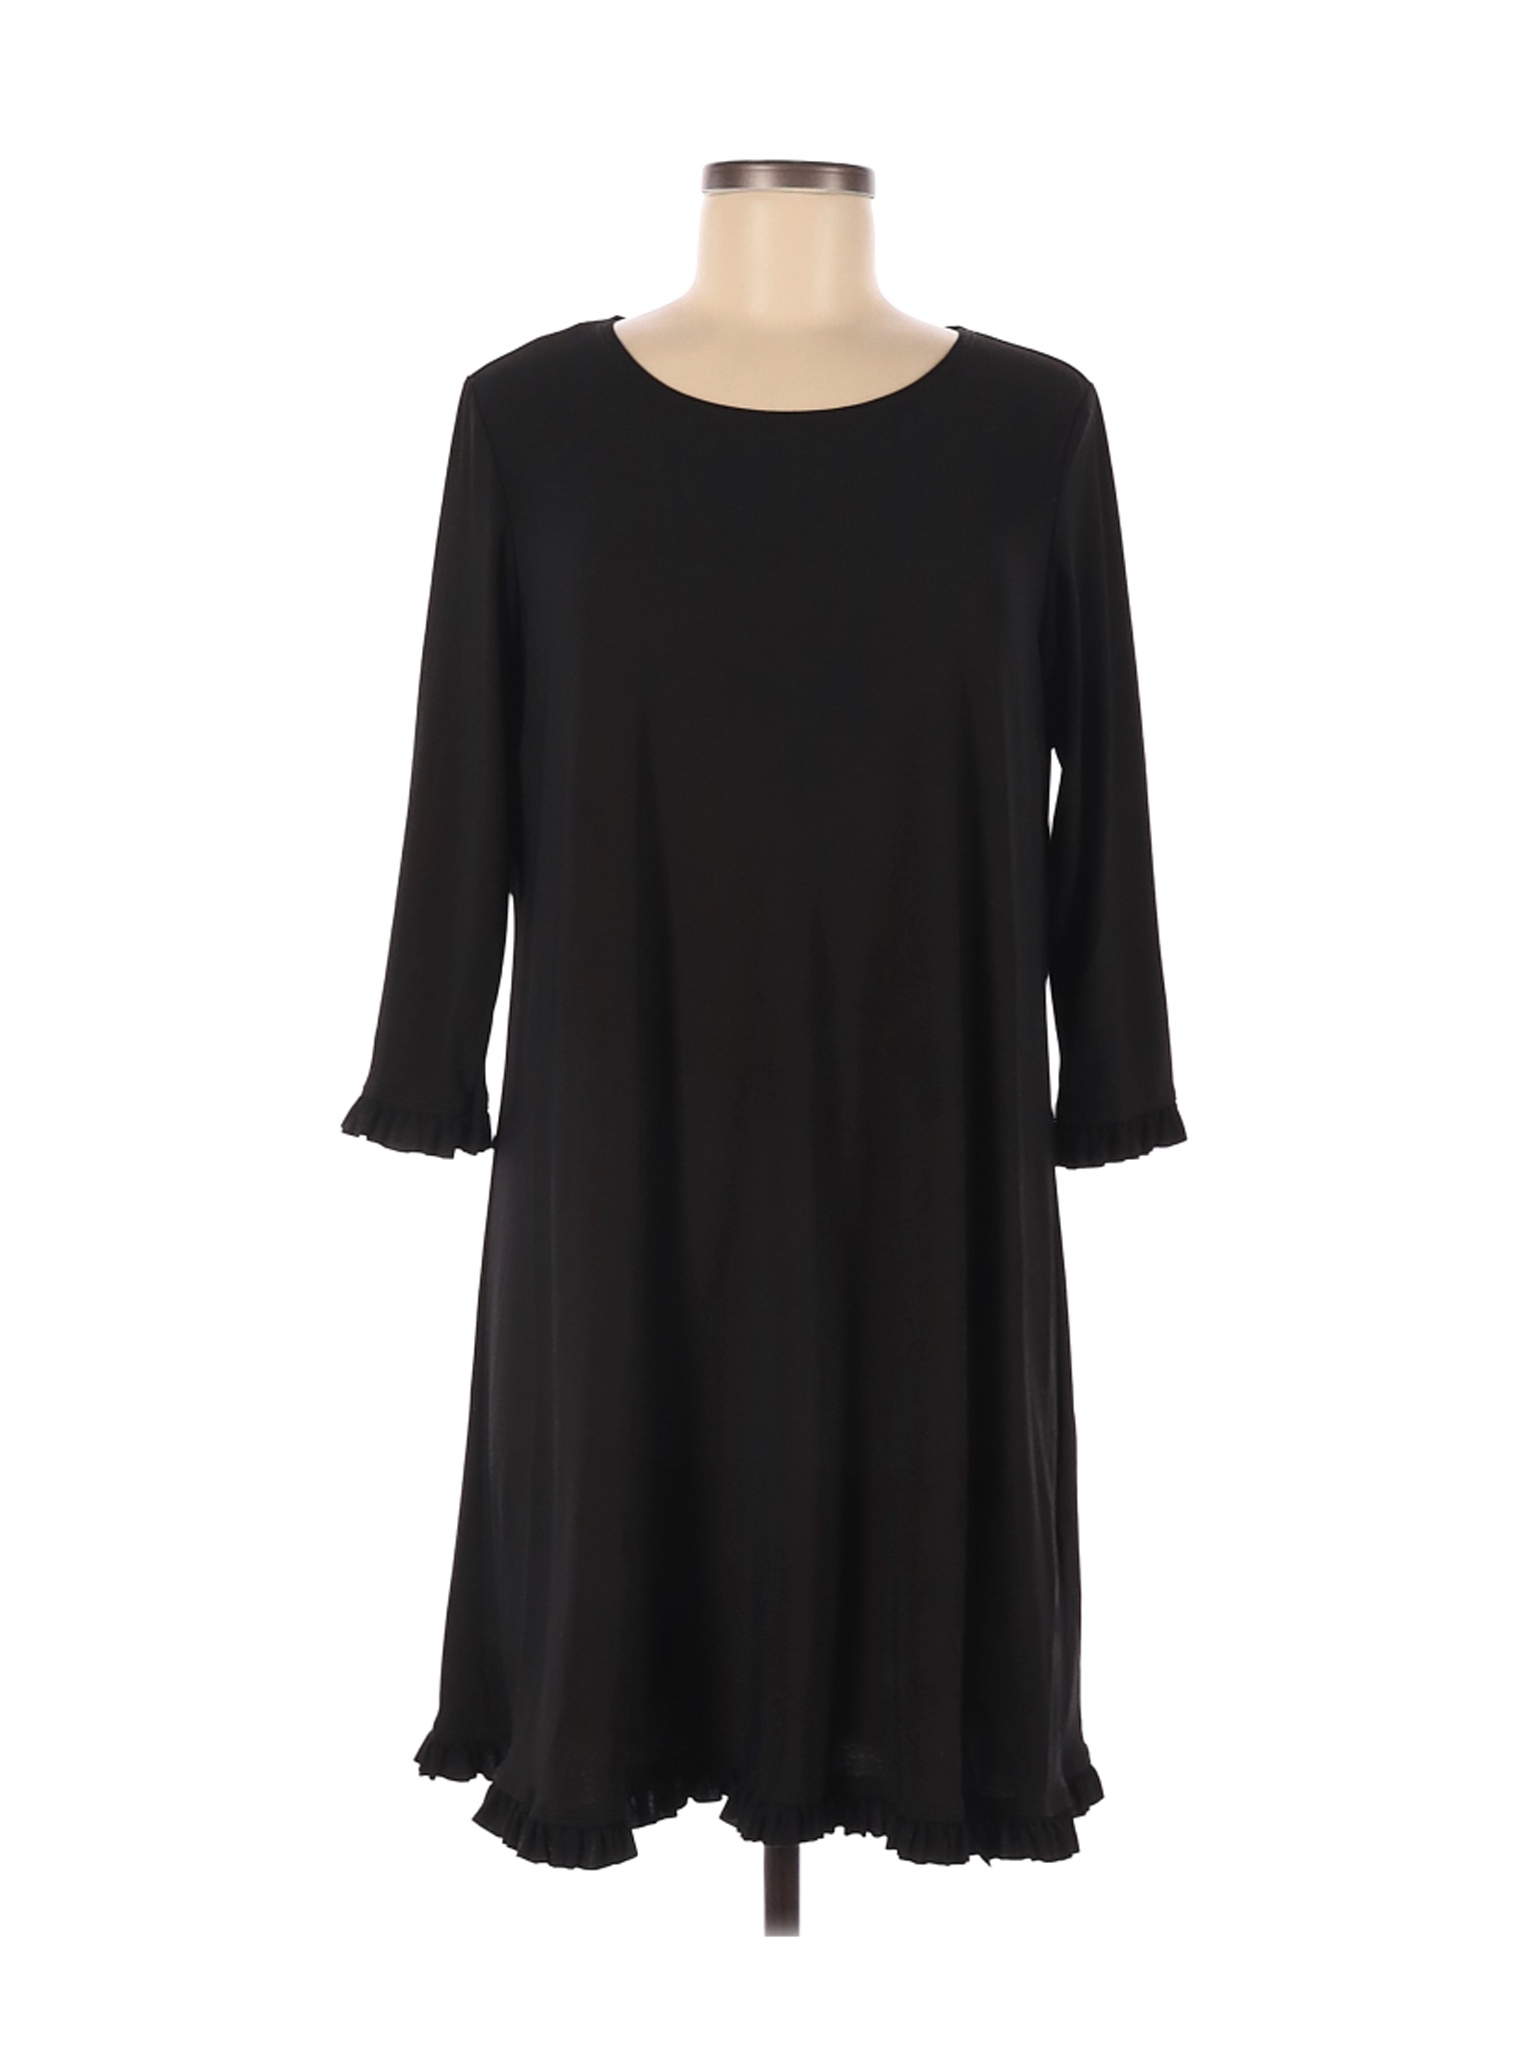 Nik and Nash Women Black Casual Dress L | eBay